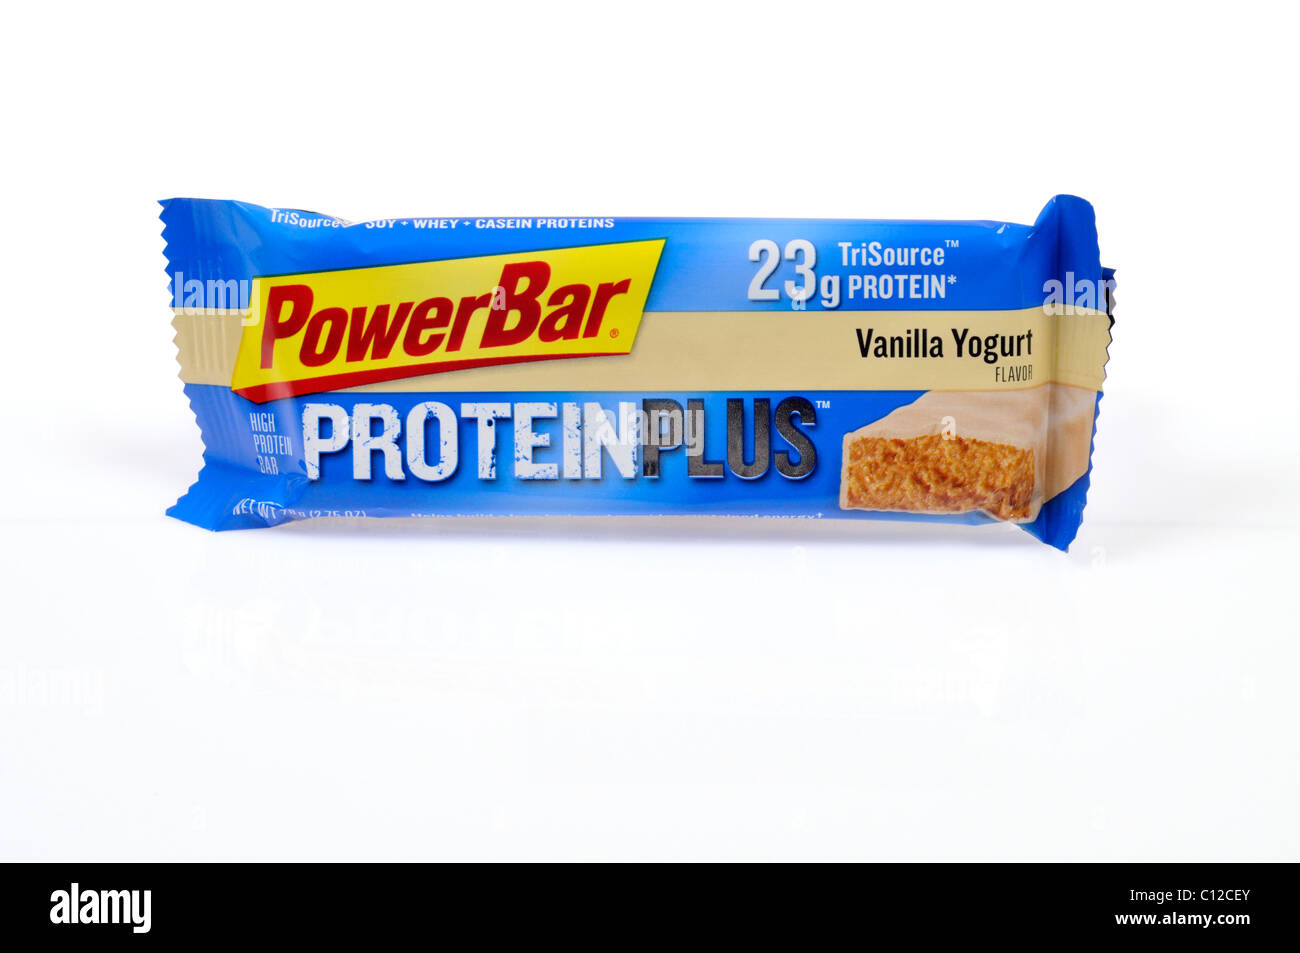 Protein Plus PowerBar in wrapper on white background, cutout. Stock Photo